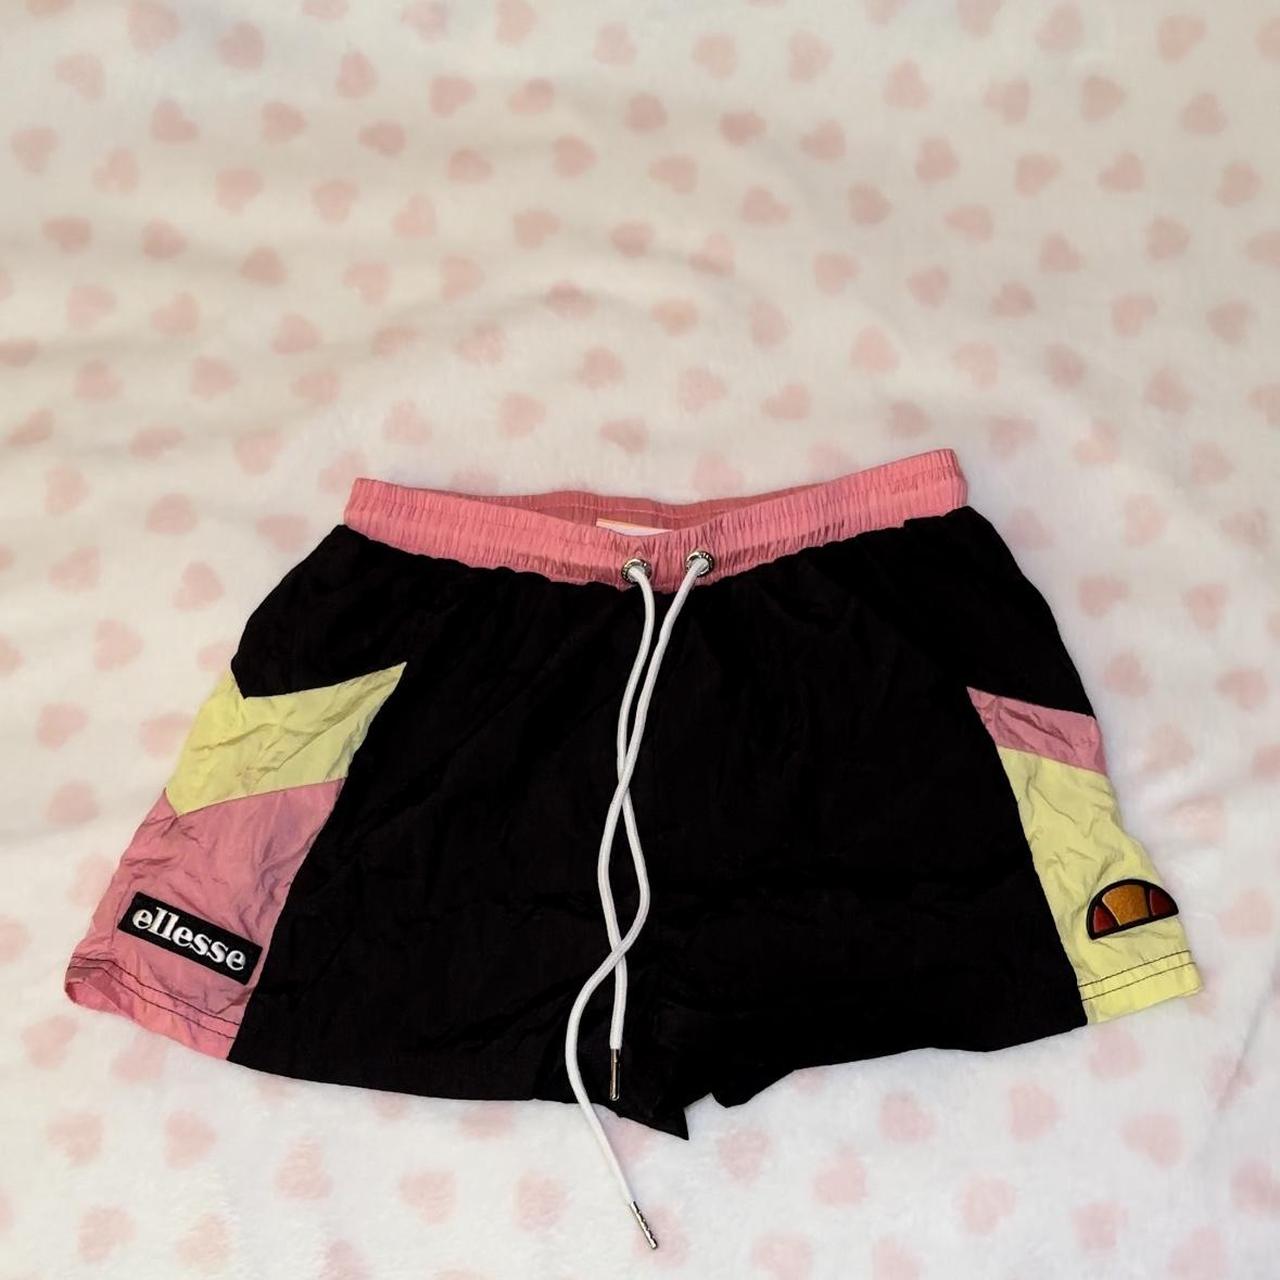 Ellesse Women's Black and Pink Shorts